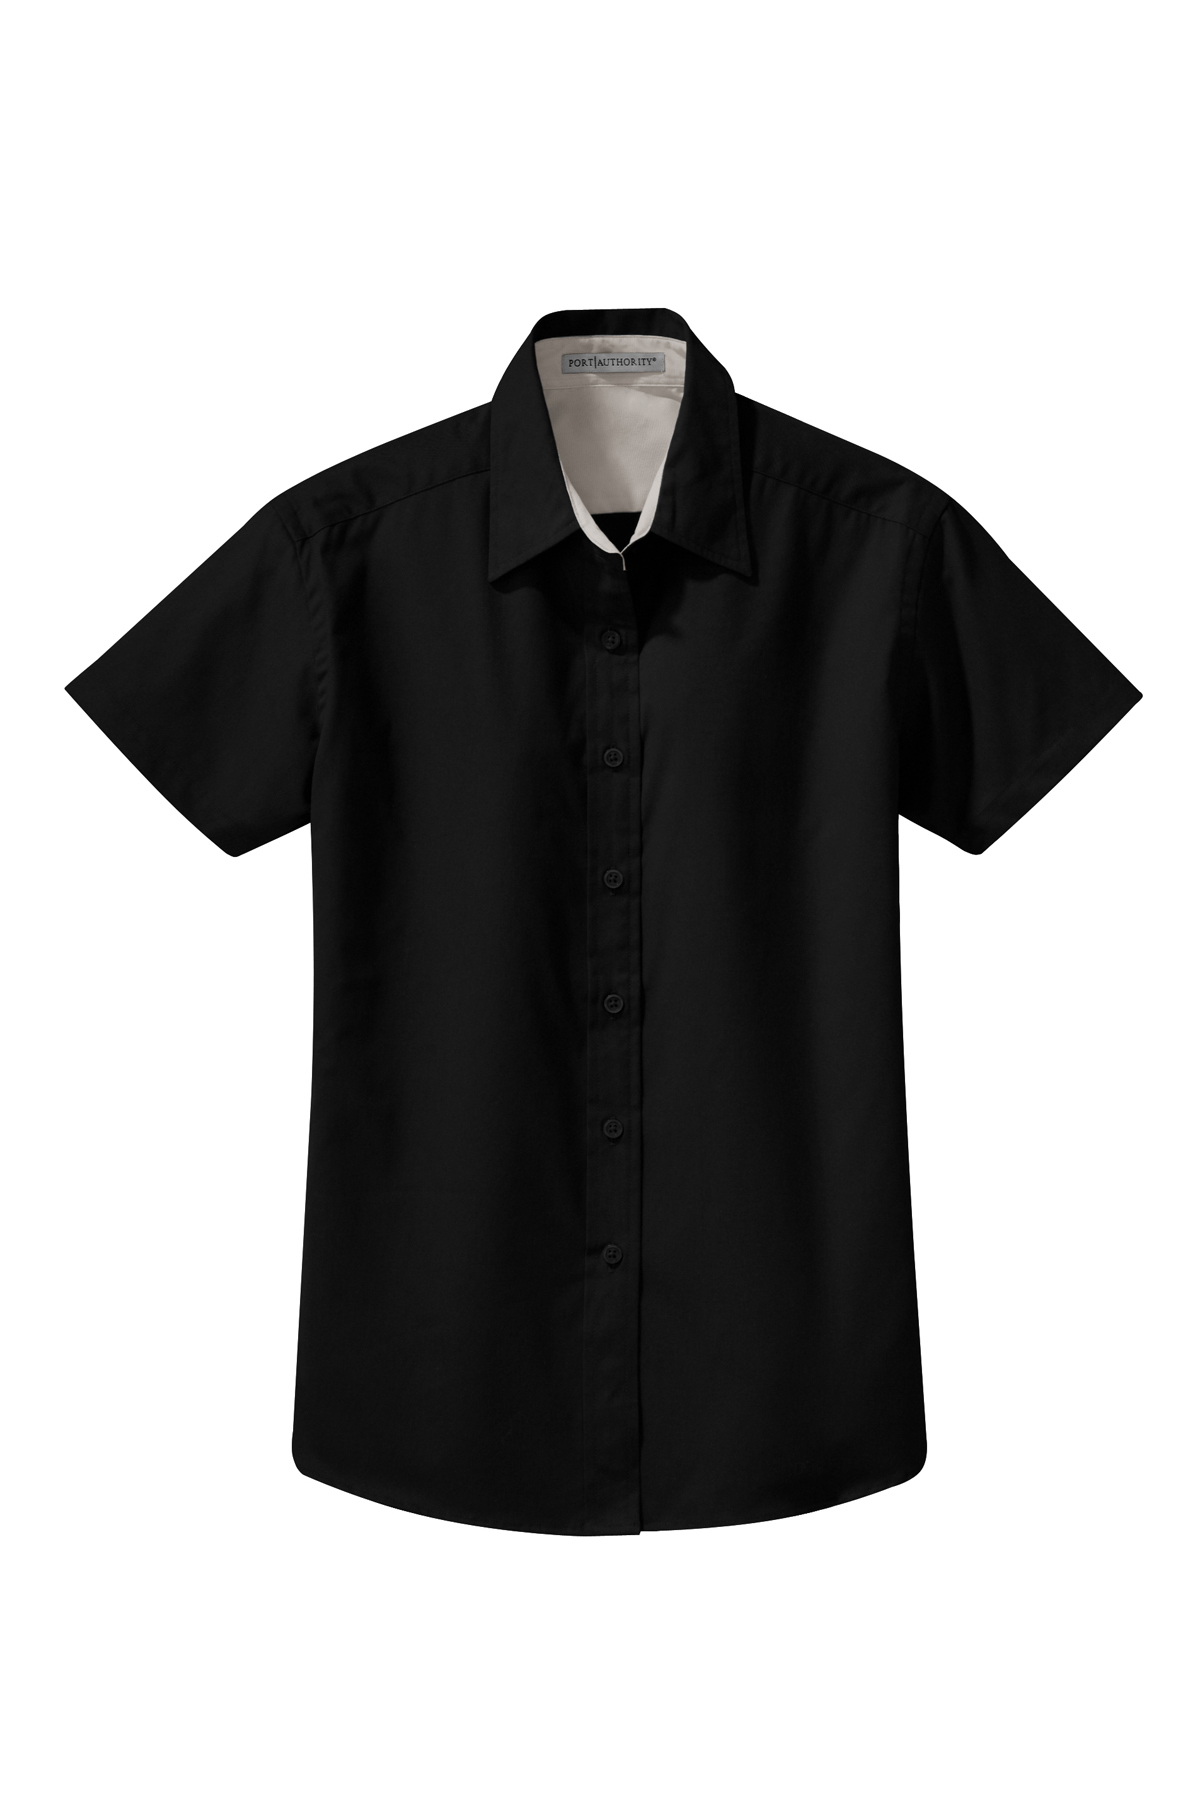 Product | Care Shirt | Authority Port Sleeve Easy Short Ladies Port Authority